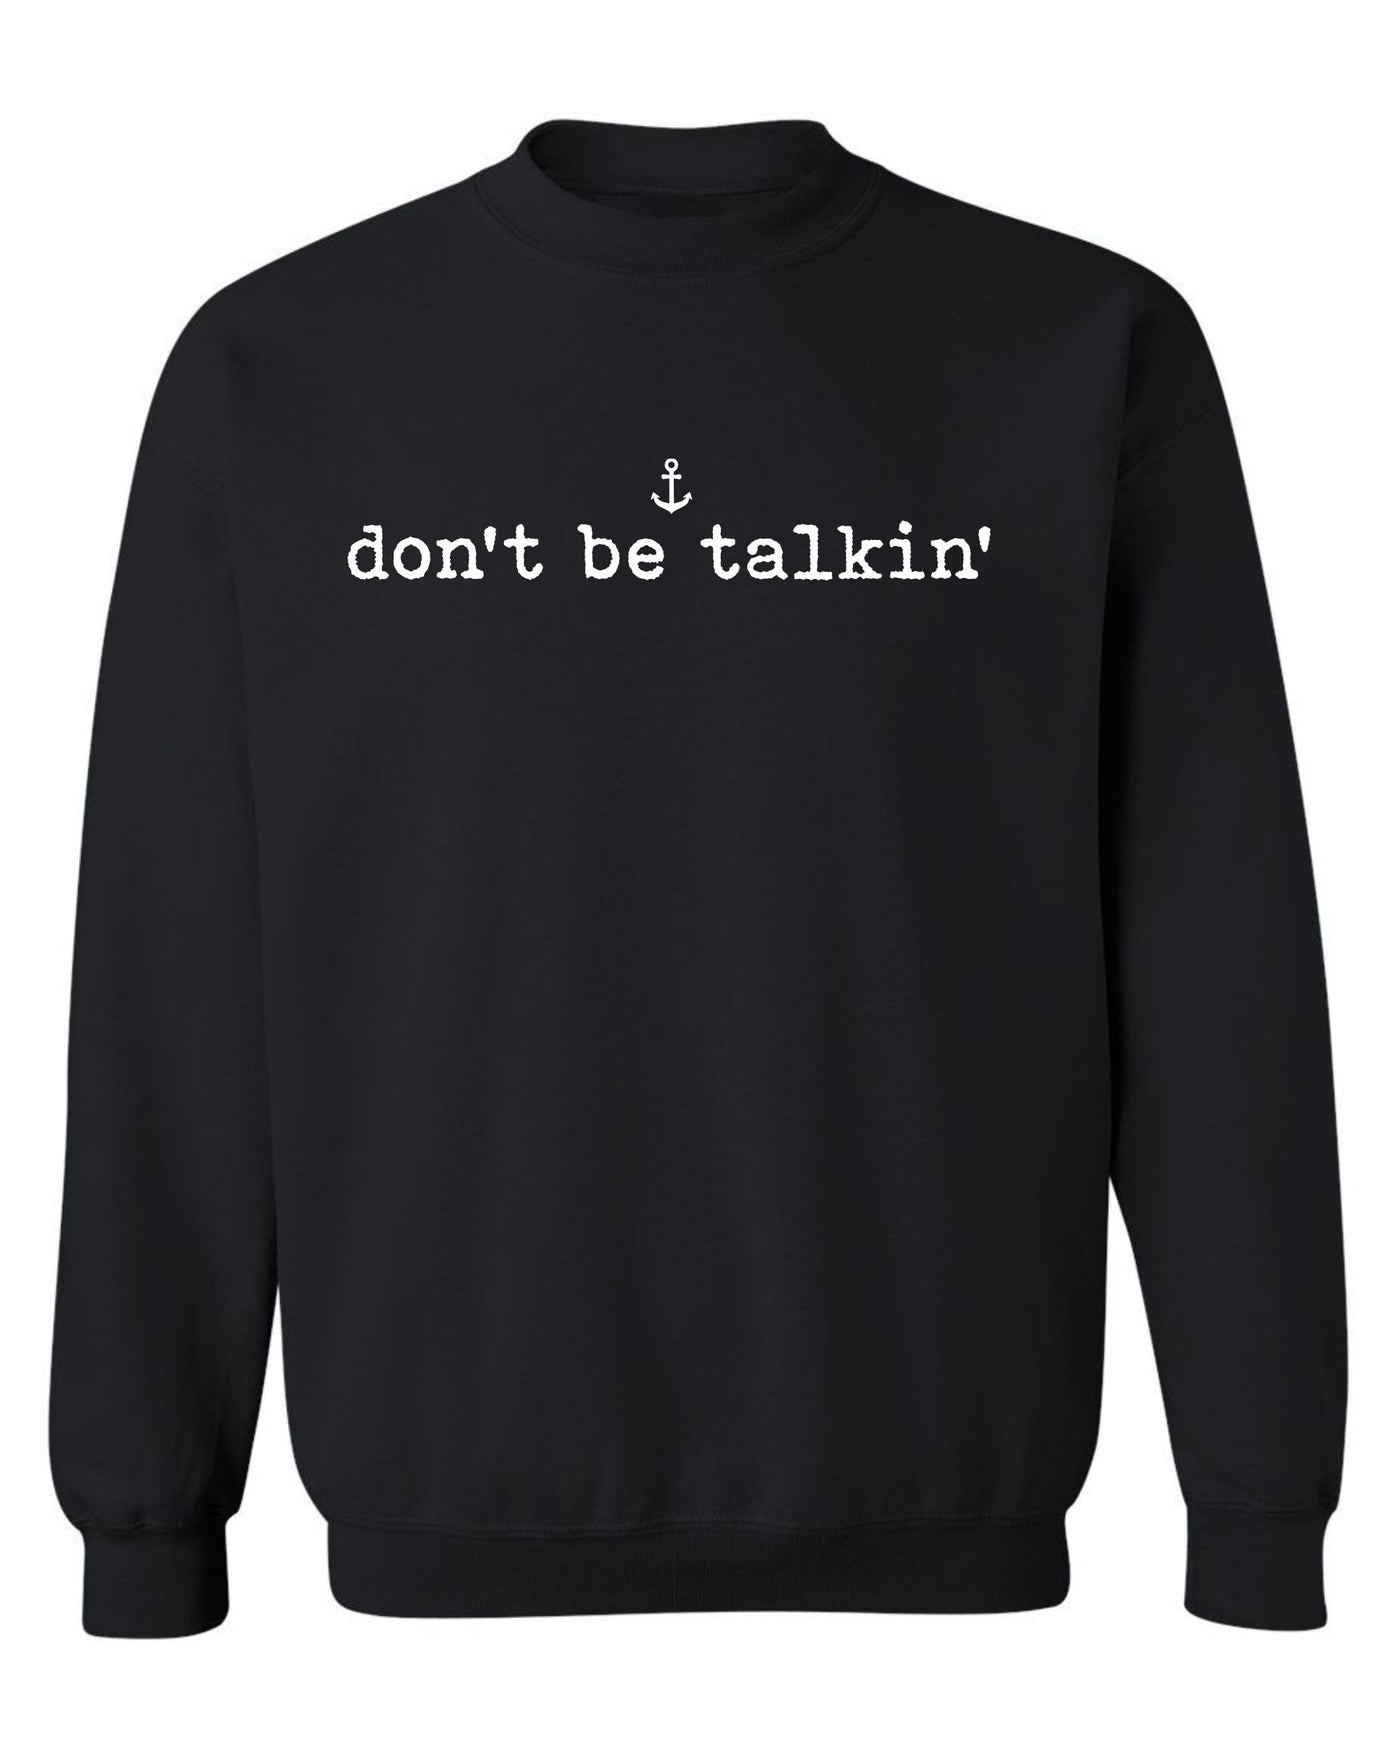 "Don't Be Talkin'" Unisex Crewneck Sweatshirt